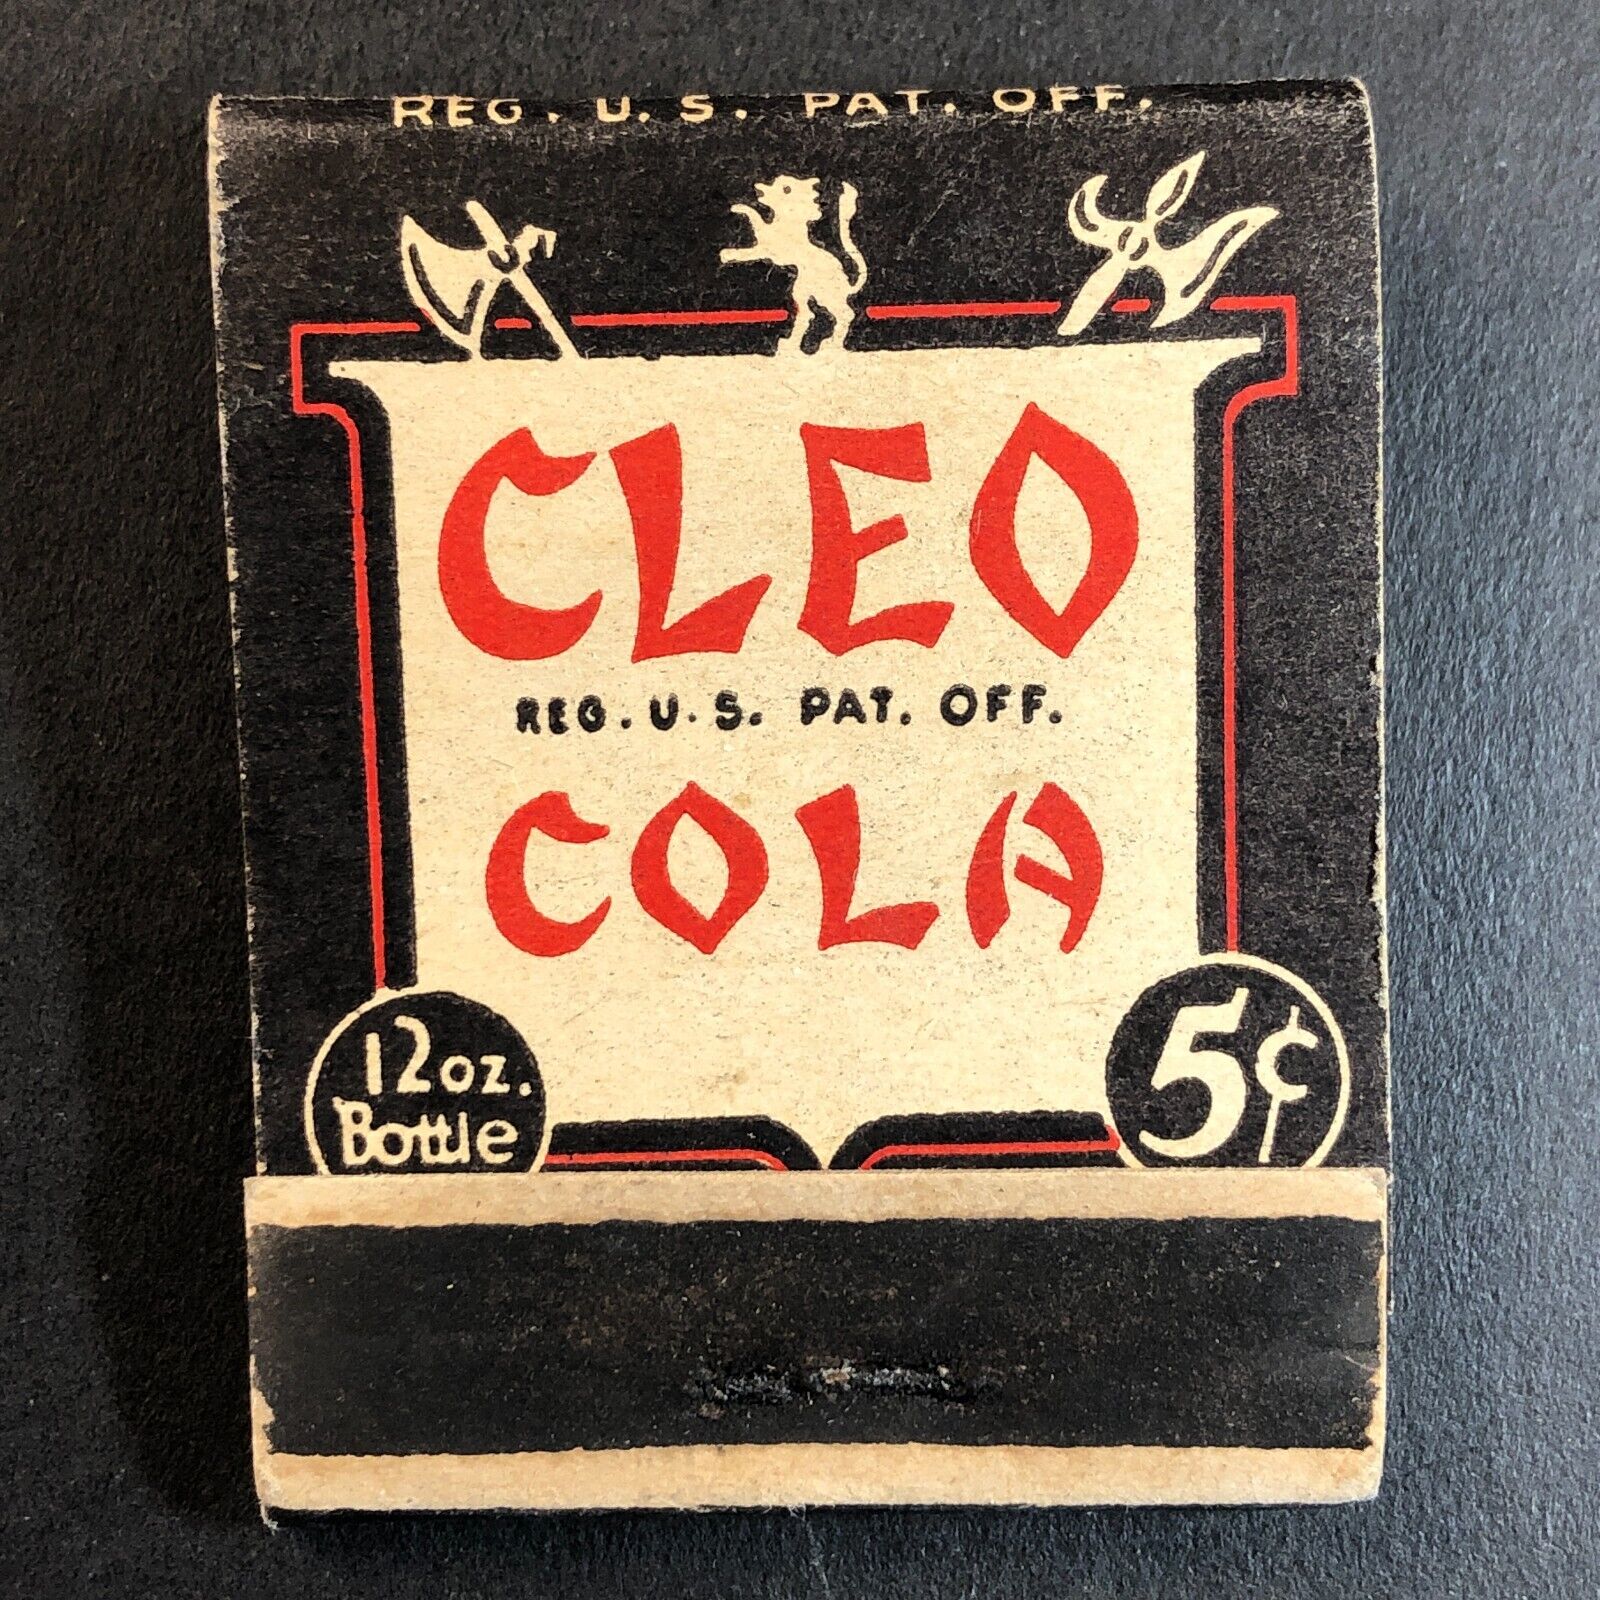 Cleo Cola 12oz Bottle 5c Full Matchbook c1930's-40's VGC Scarce